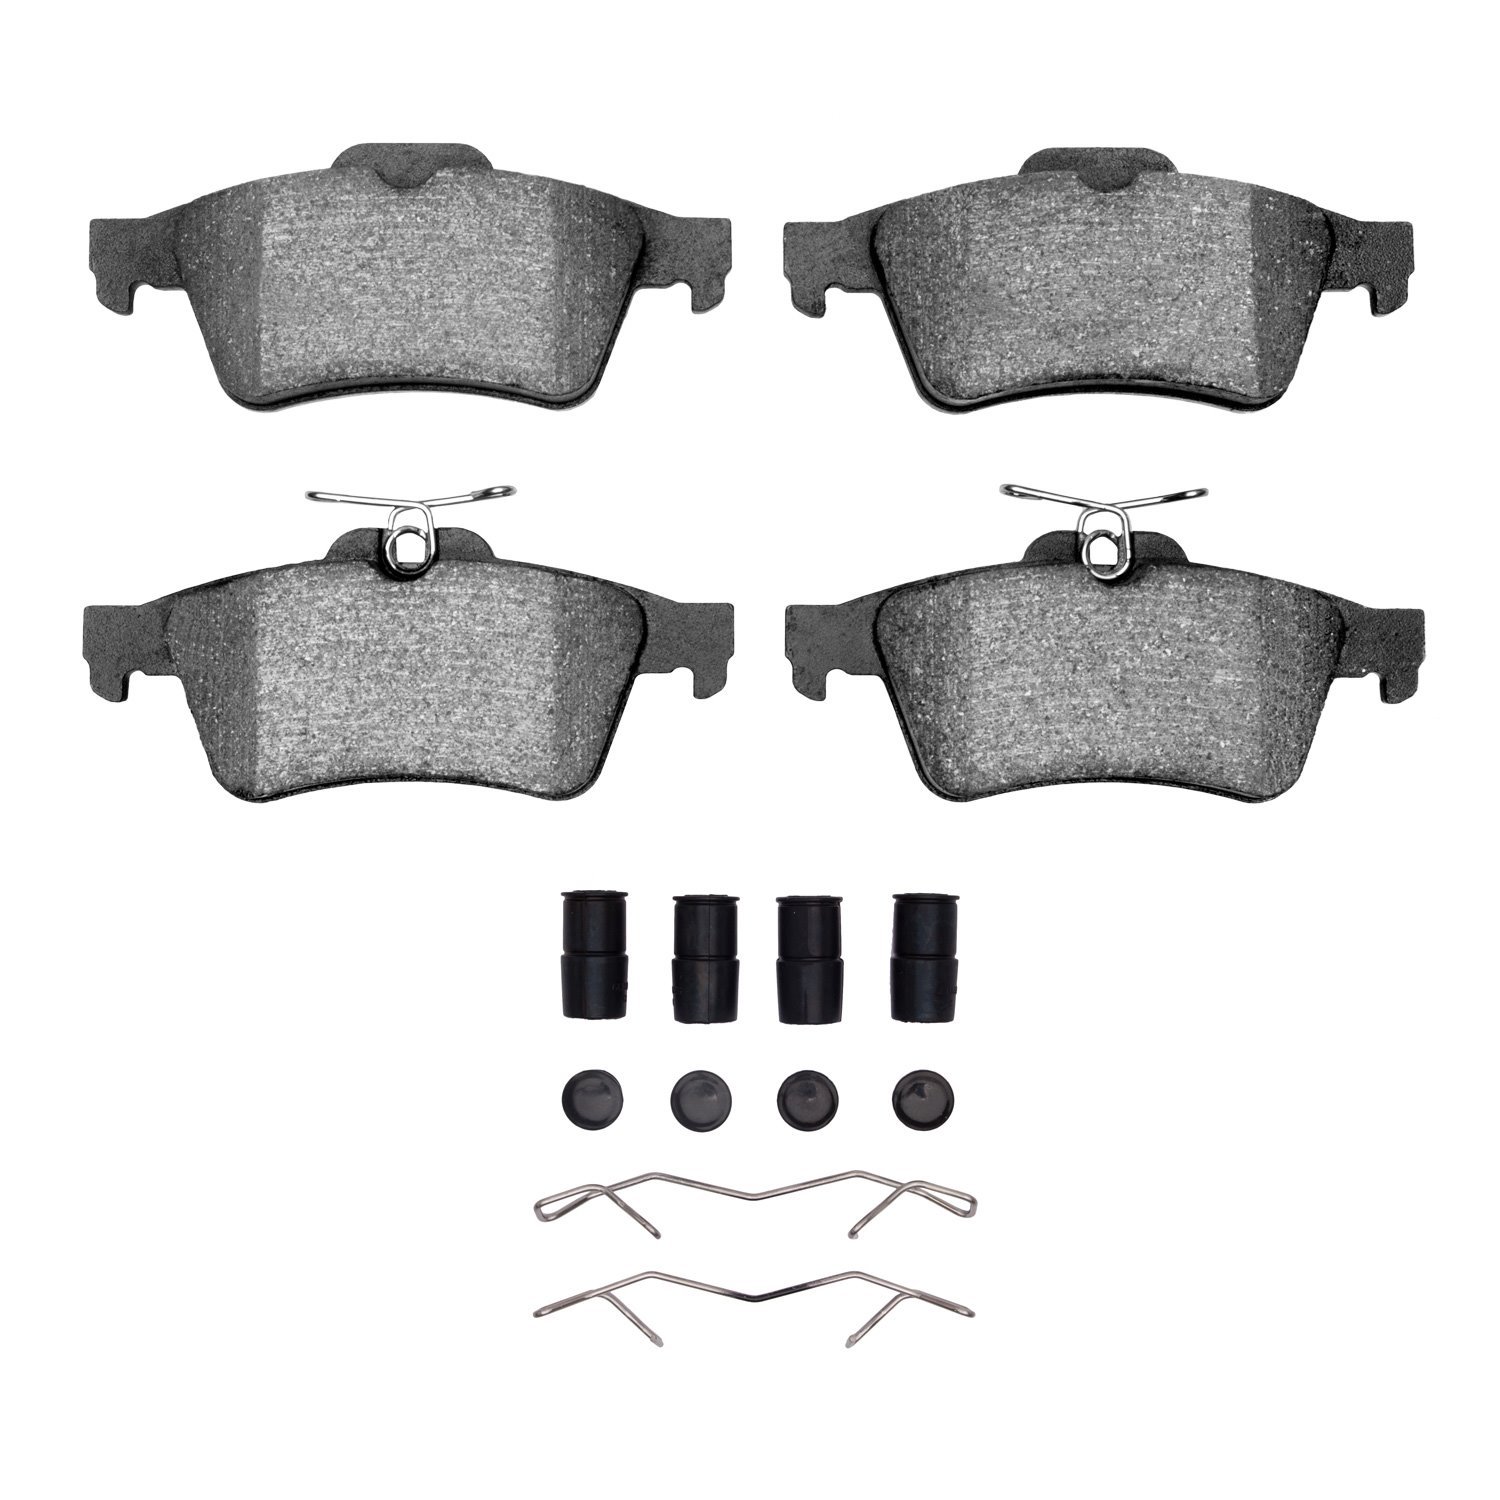 1551-1095-01 5000 Advanced Ceramic Brake Pads & Hardware Kit, Fits Select Multiple Makes/Models, Position: Rear